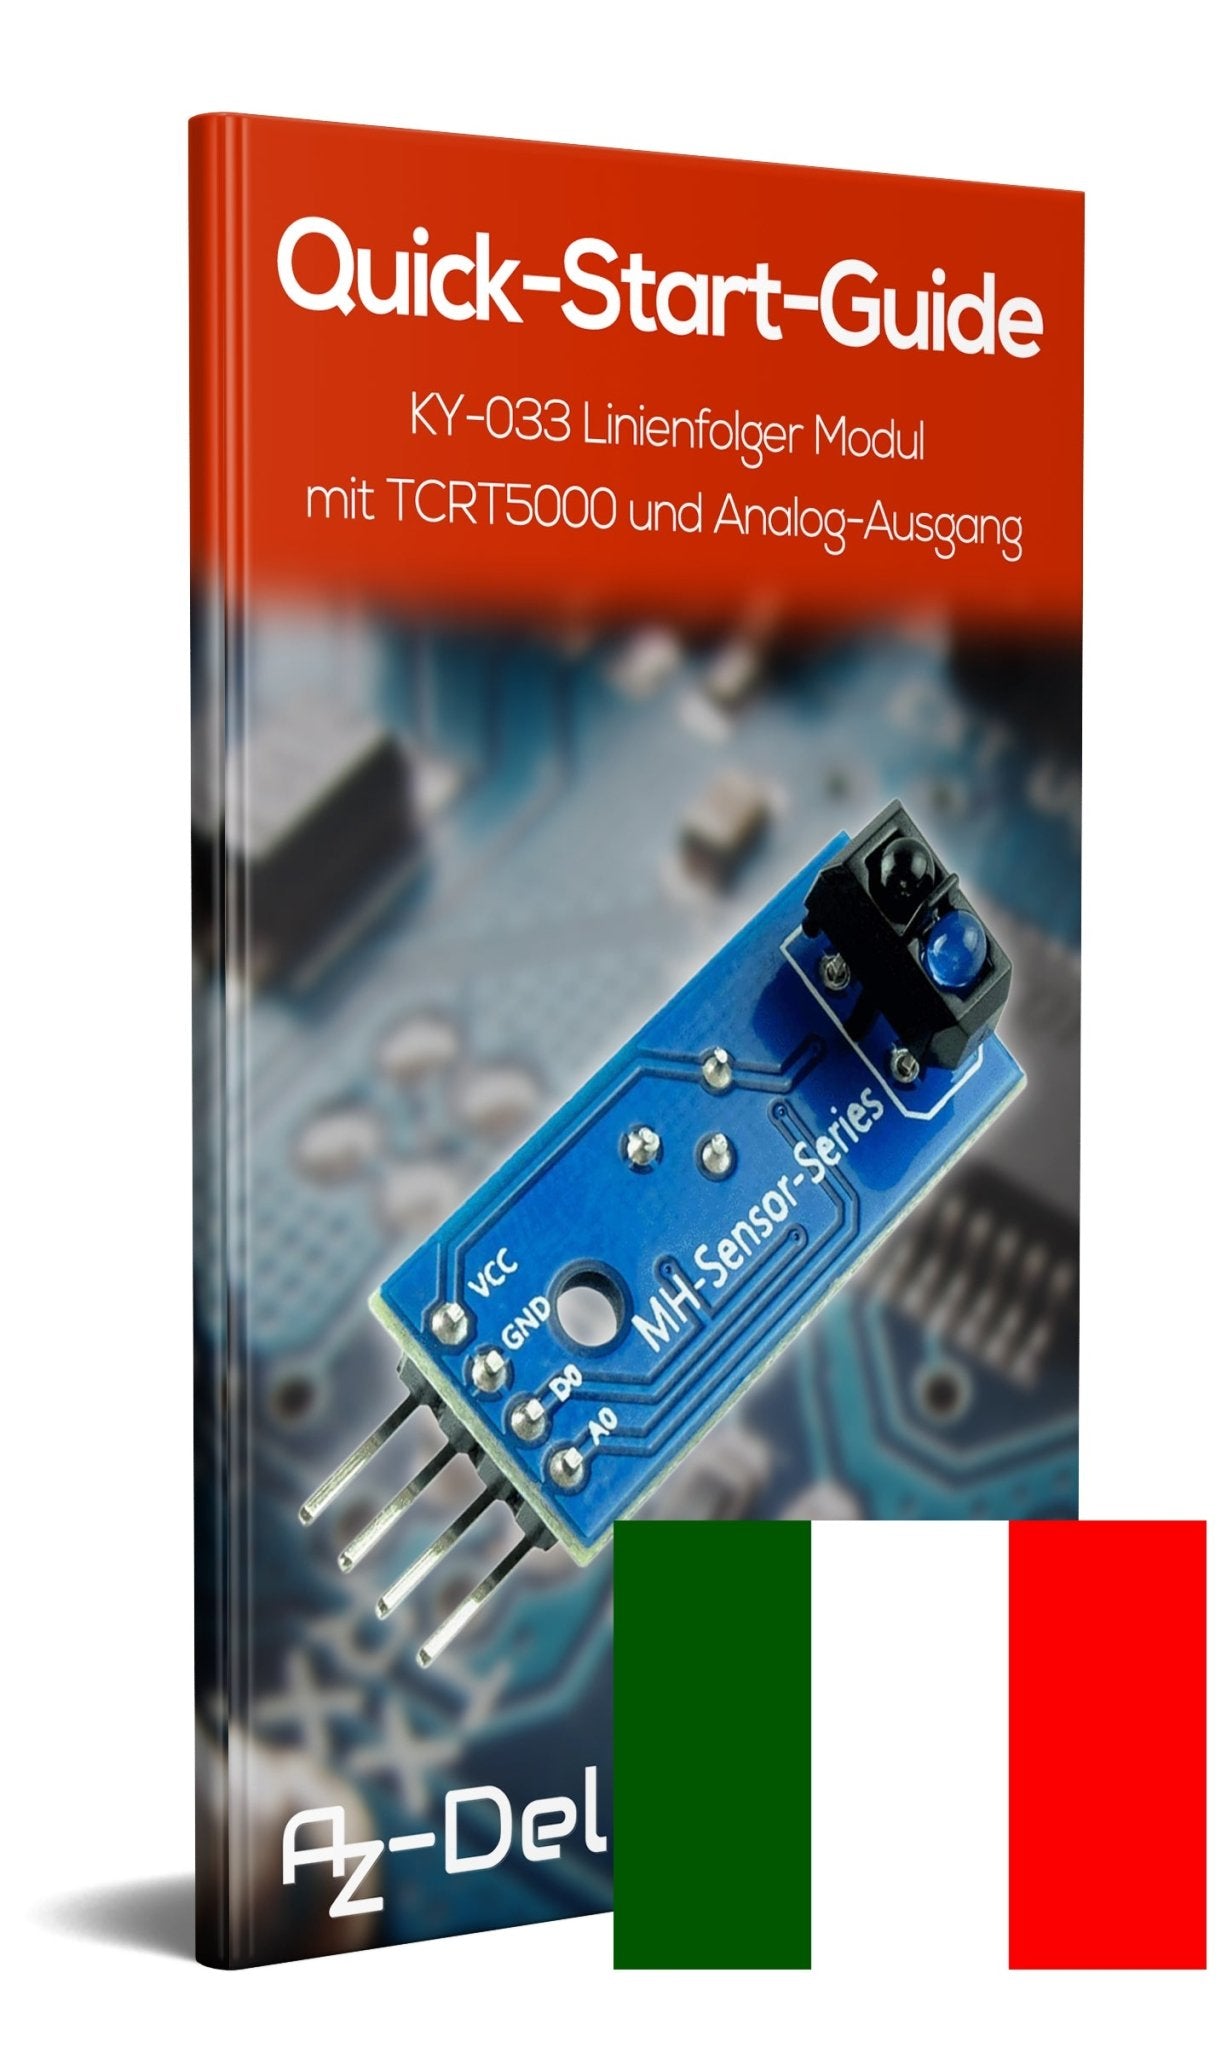 KY-033 Linienfolger Modul mit TCRT5000 und Analog-Ausgang - AZ-Delivery